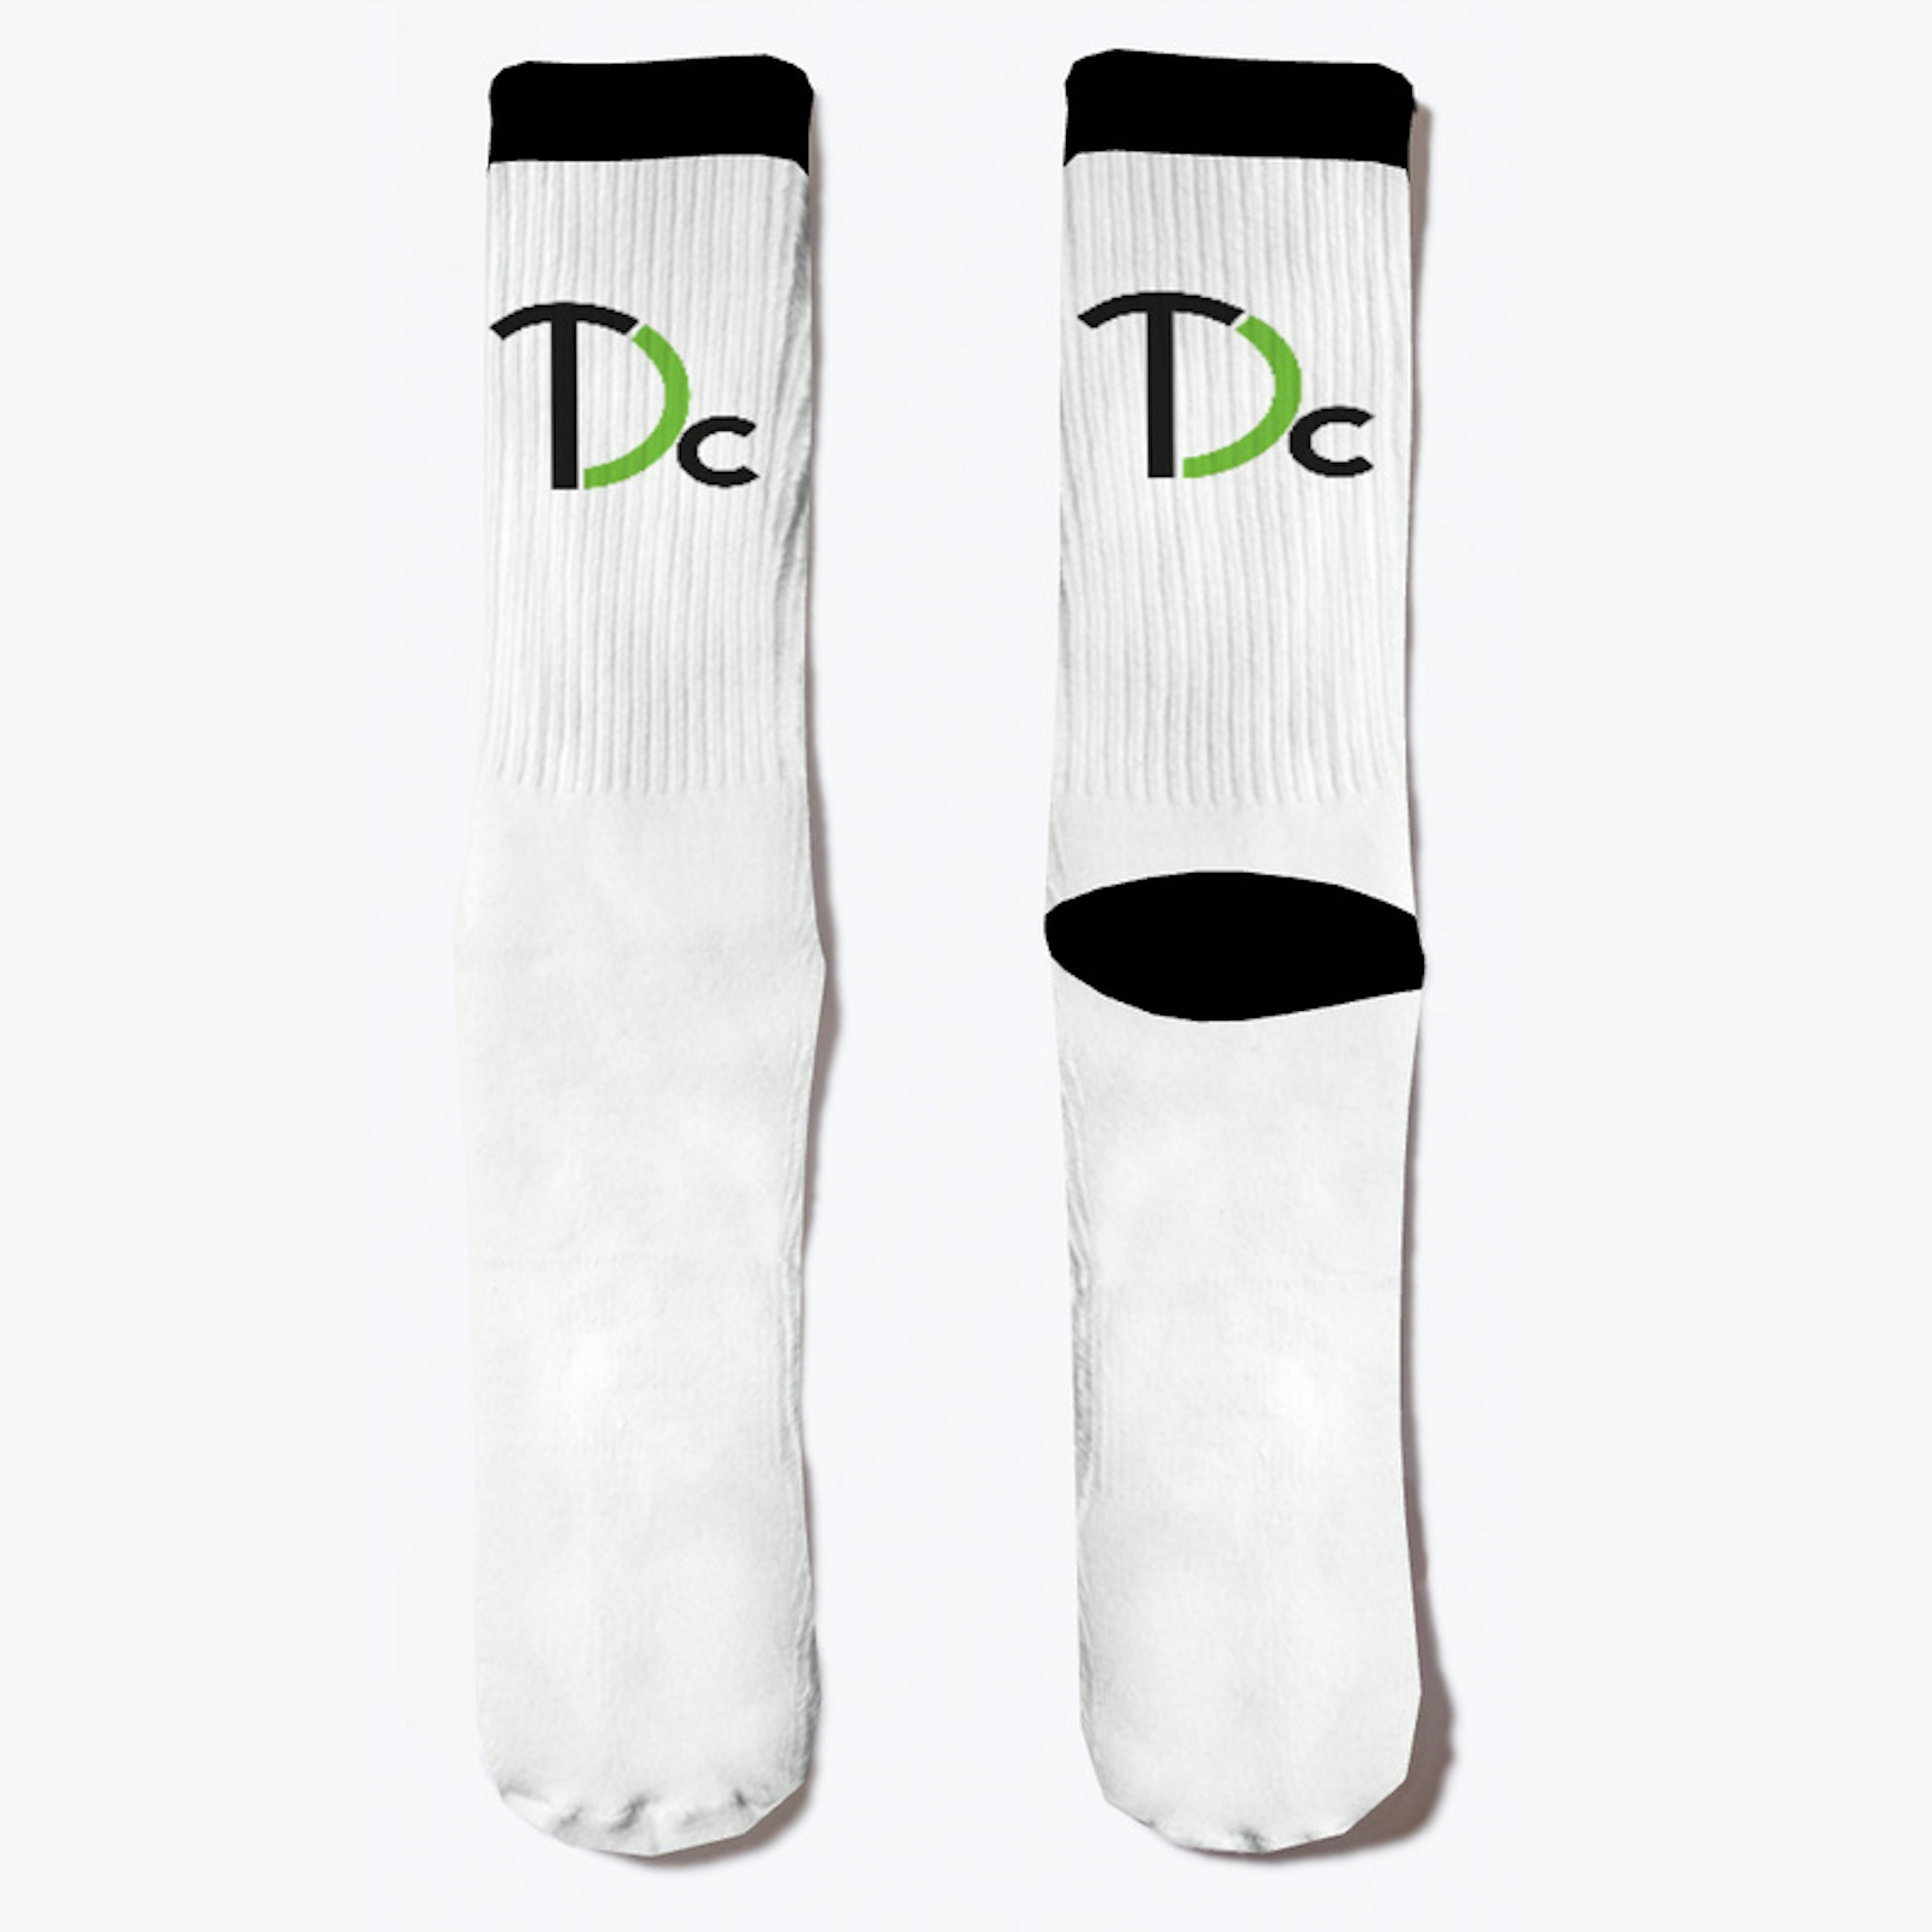 TDC Socks